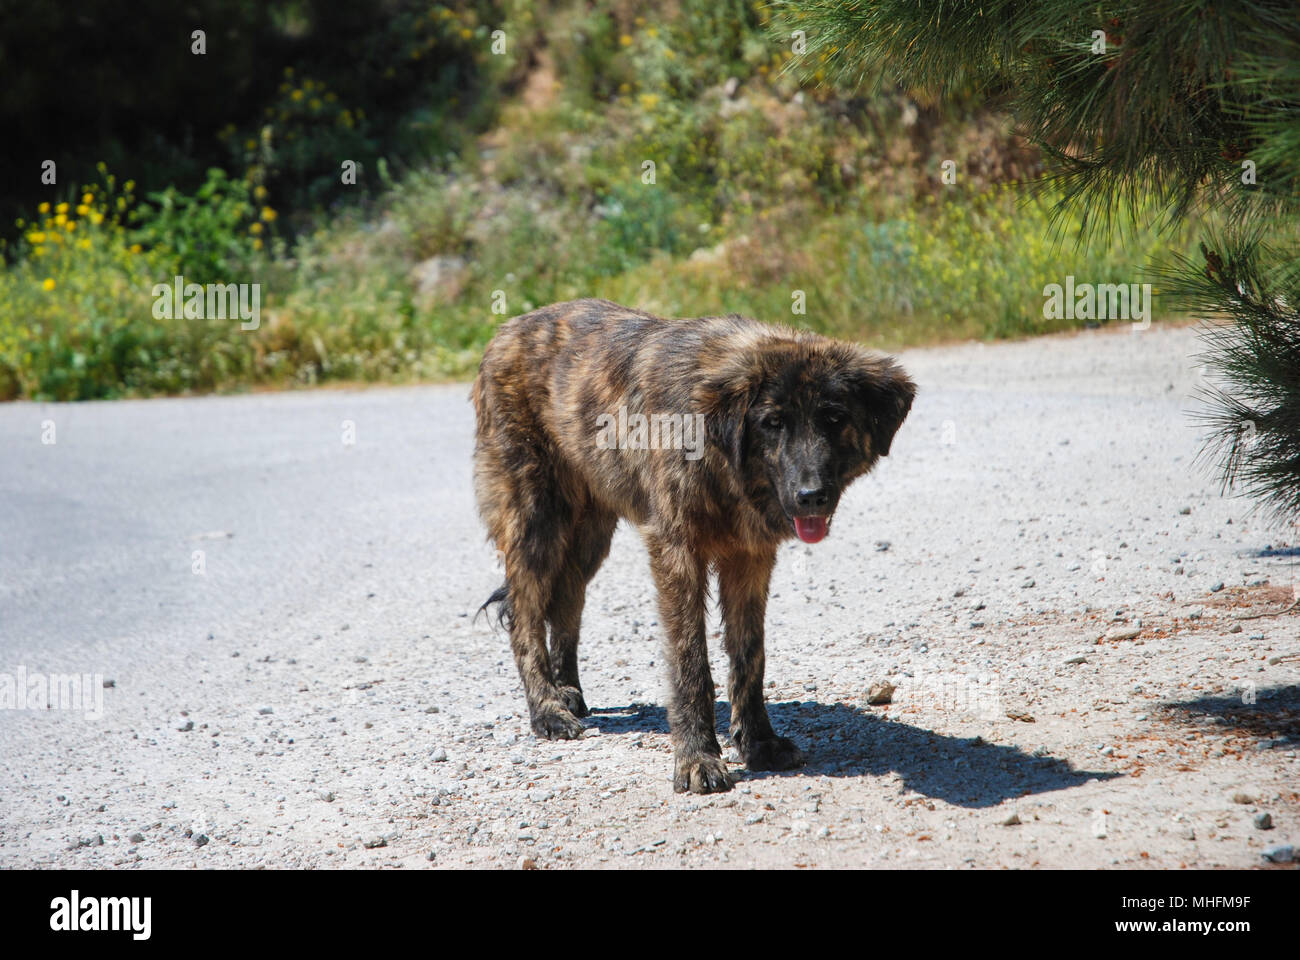 Perros salvajes deambulan solos en la carretera. Foto de stock